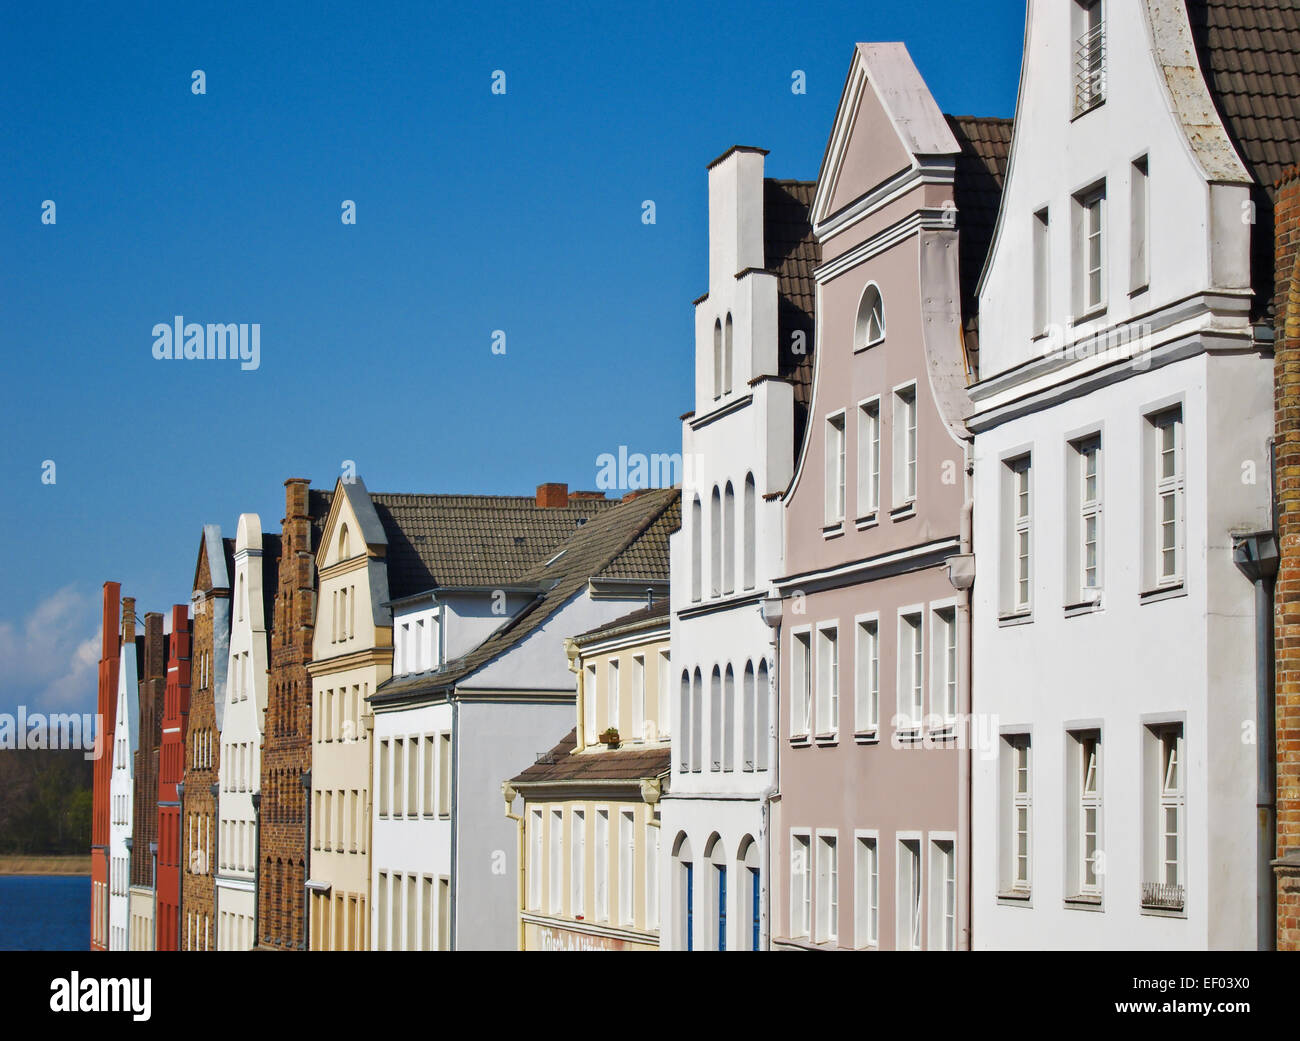 Gables in the Wokrenter Street  in Rostock (Germany). Stock Photo